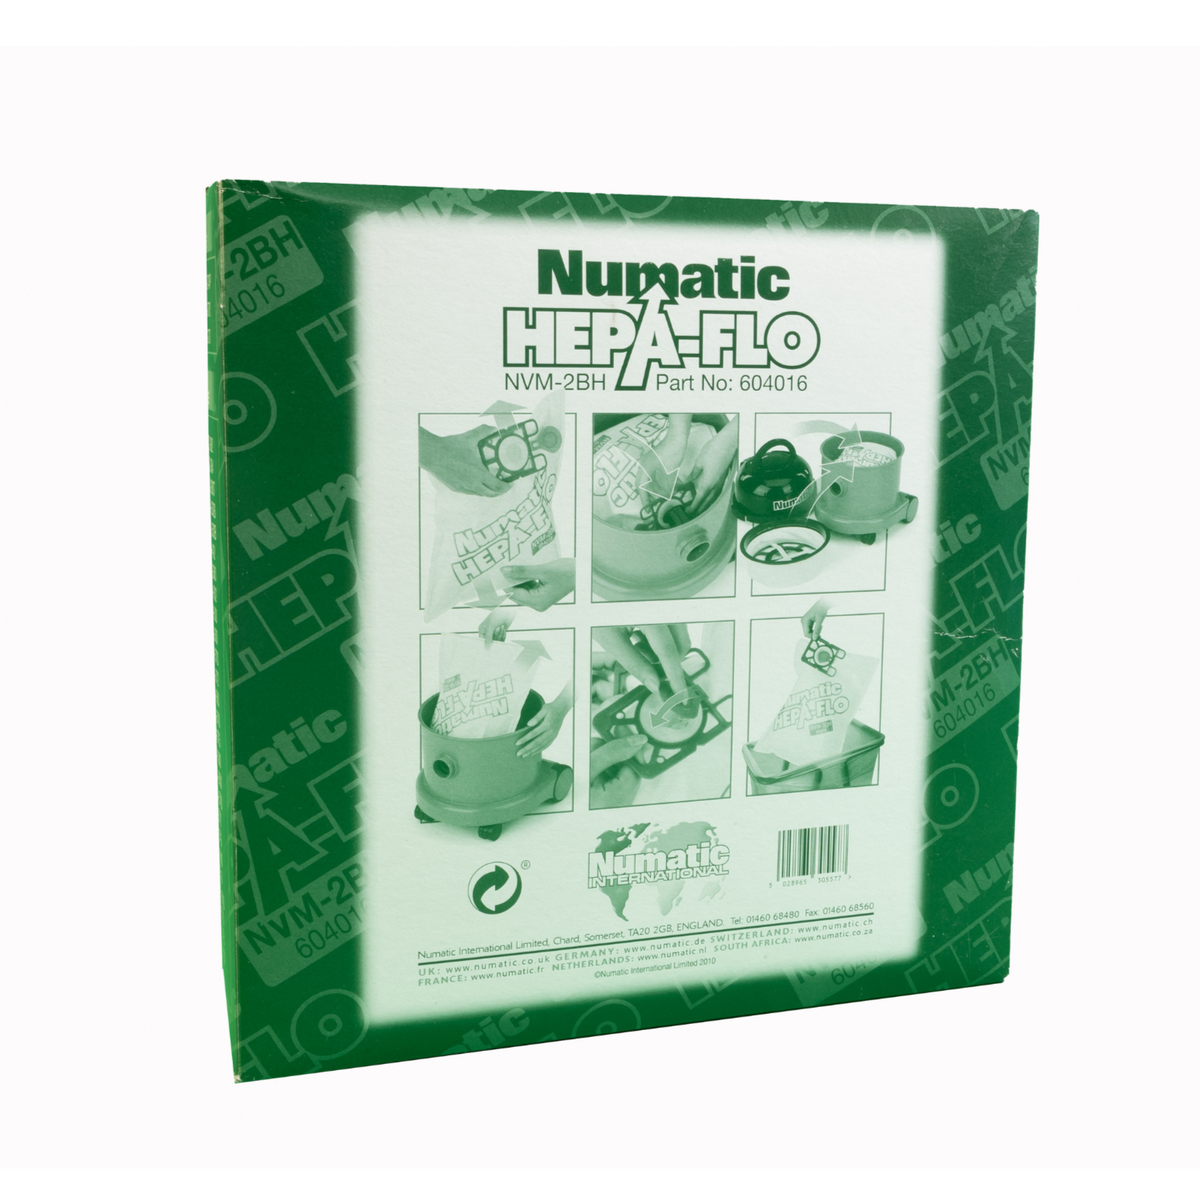 sacs hepa-flo aspirateurs nvm-2bh numatic international miranet